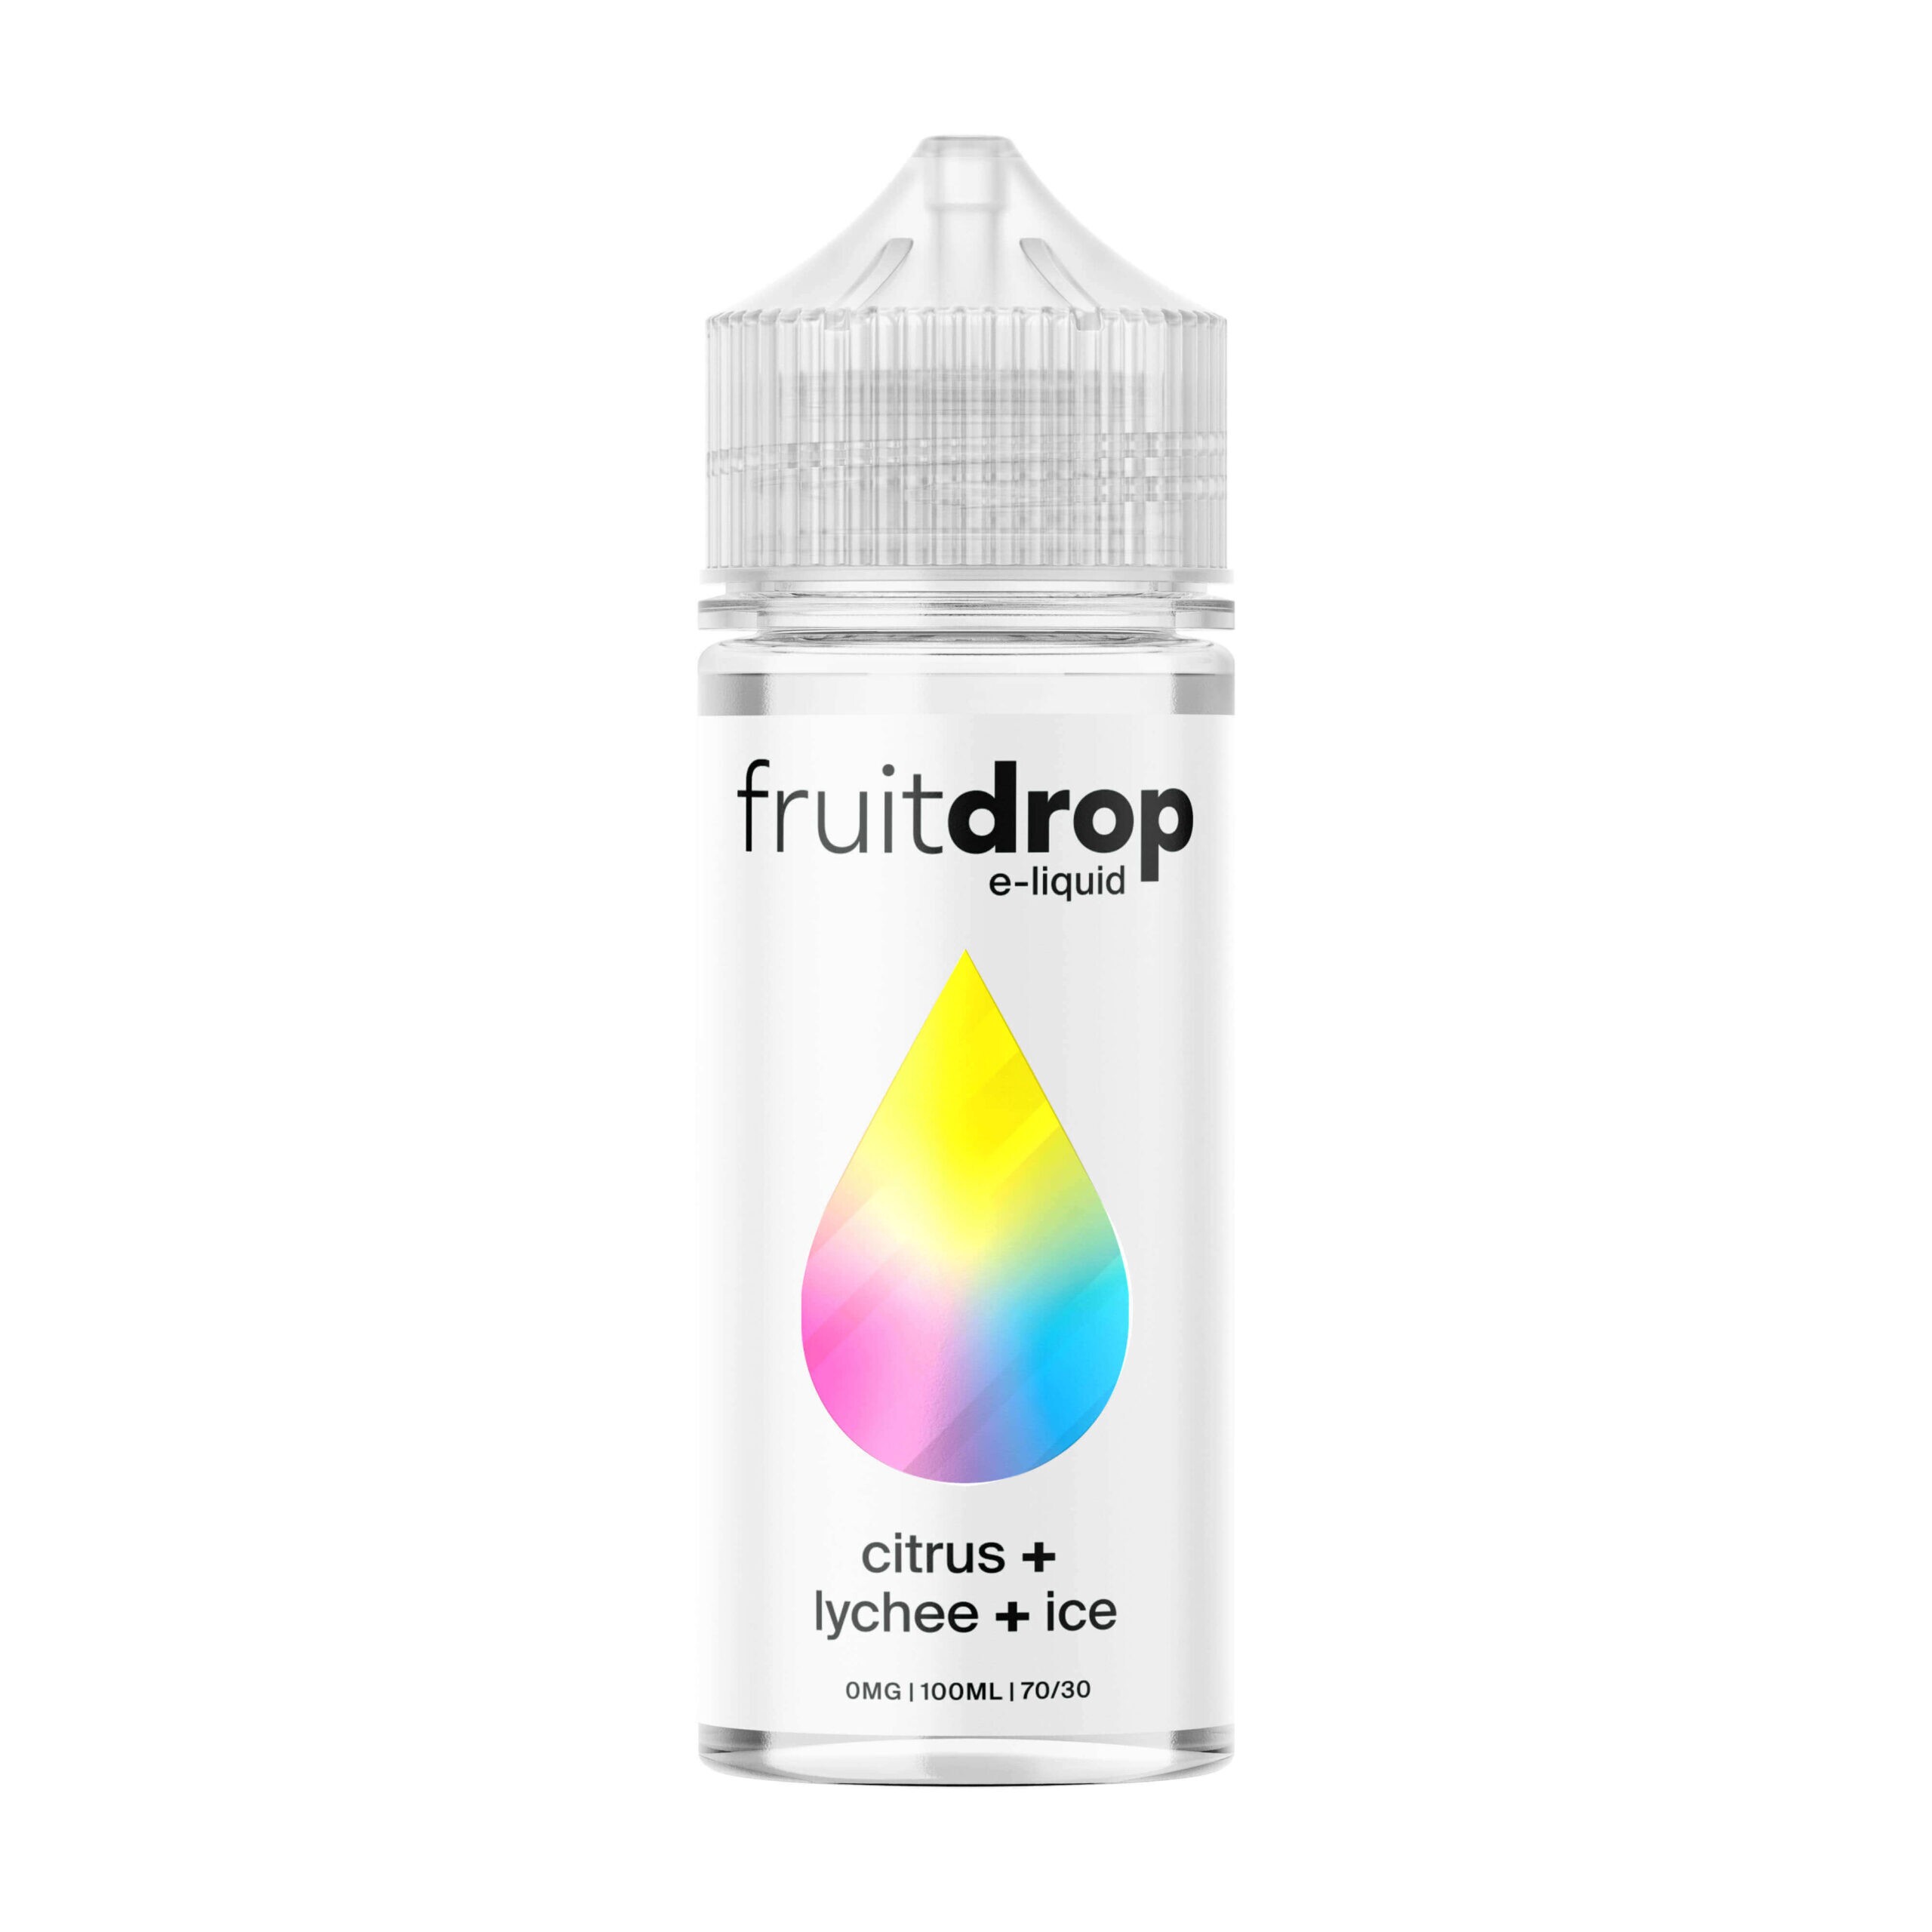 Fruit drop e-liquid citrus, lychee & ice 100ml 70/30 shortfill e-liquid available at dispergo vaping uk